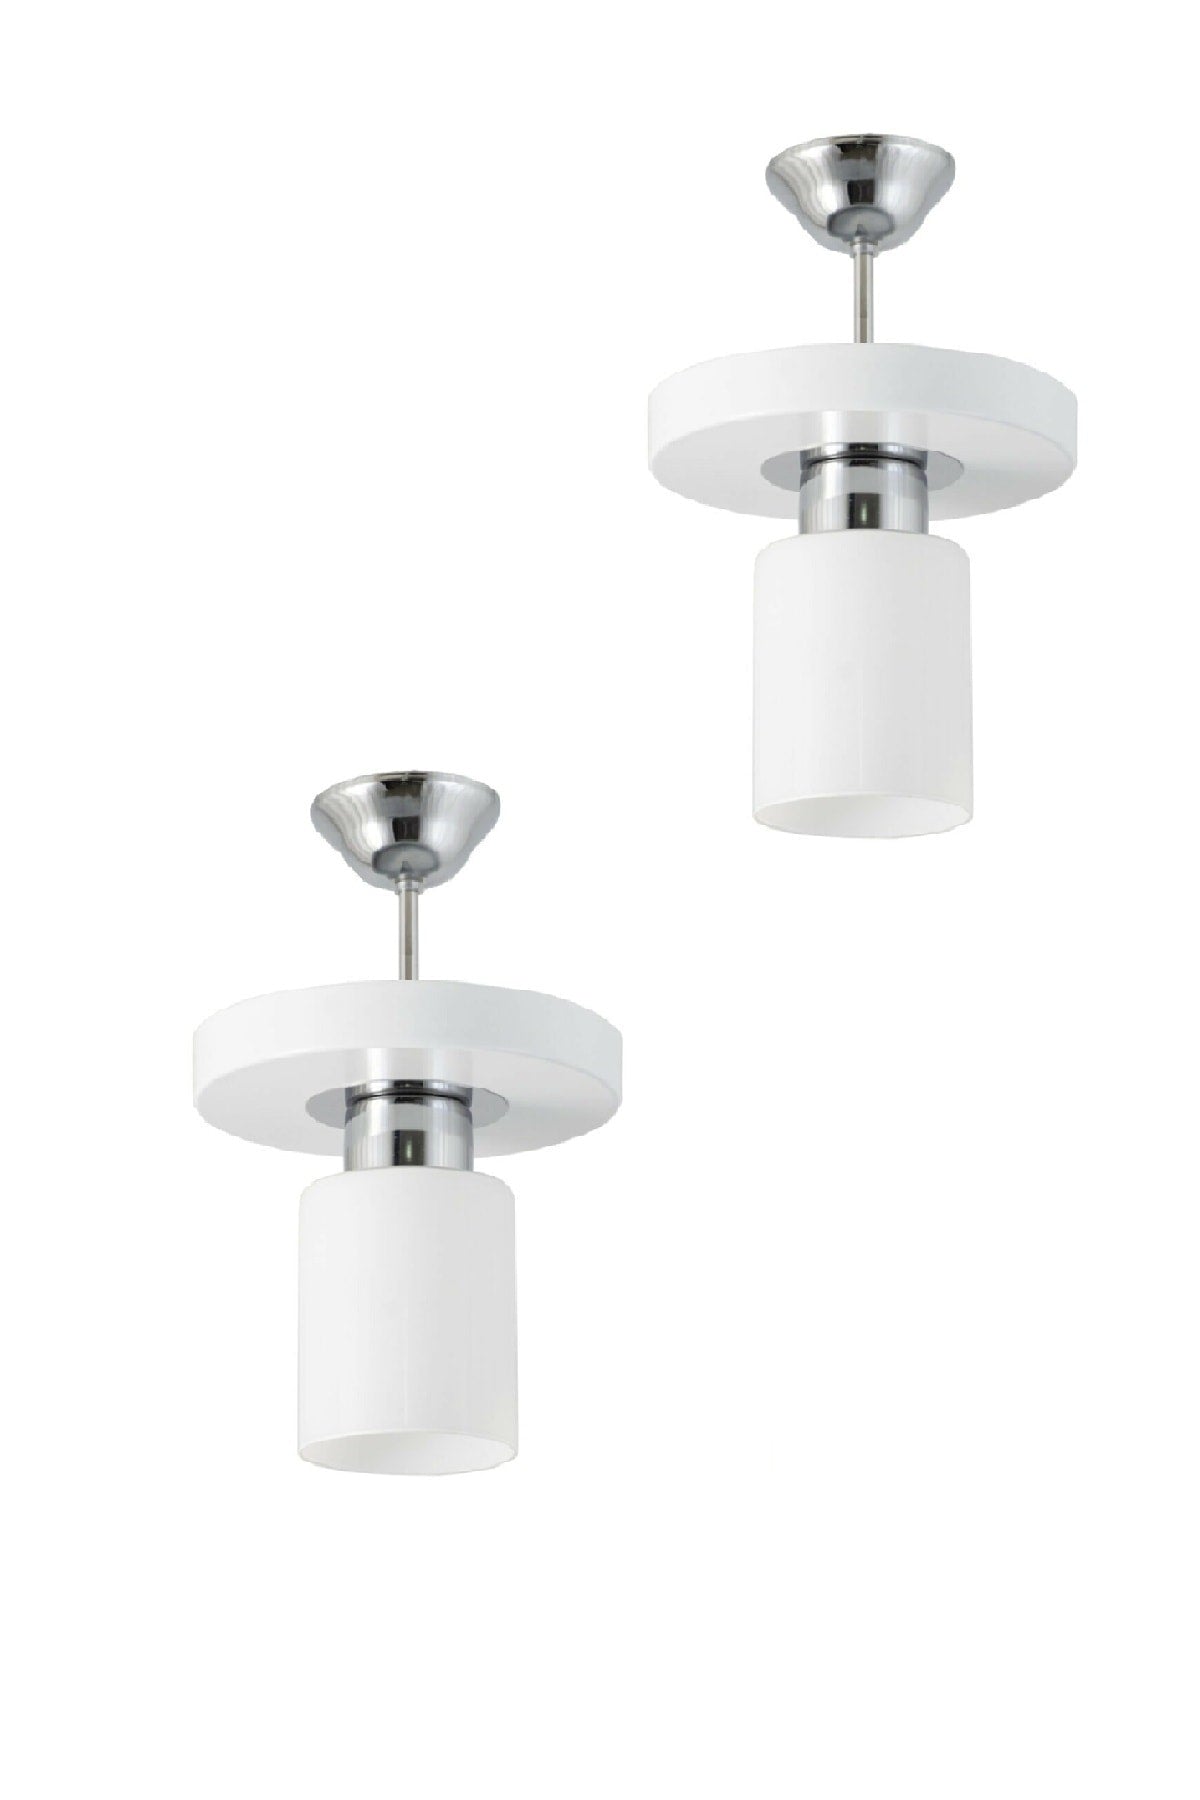 2 single modern sports model round tray white chandelier